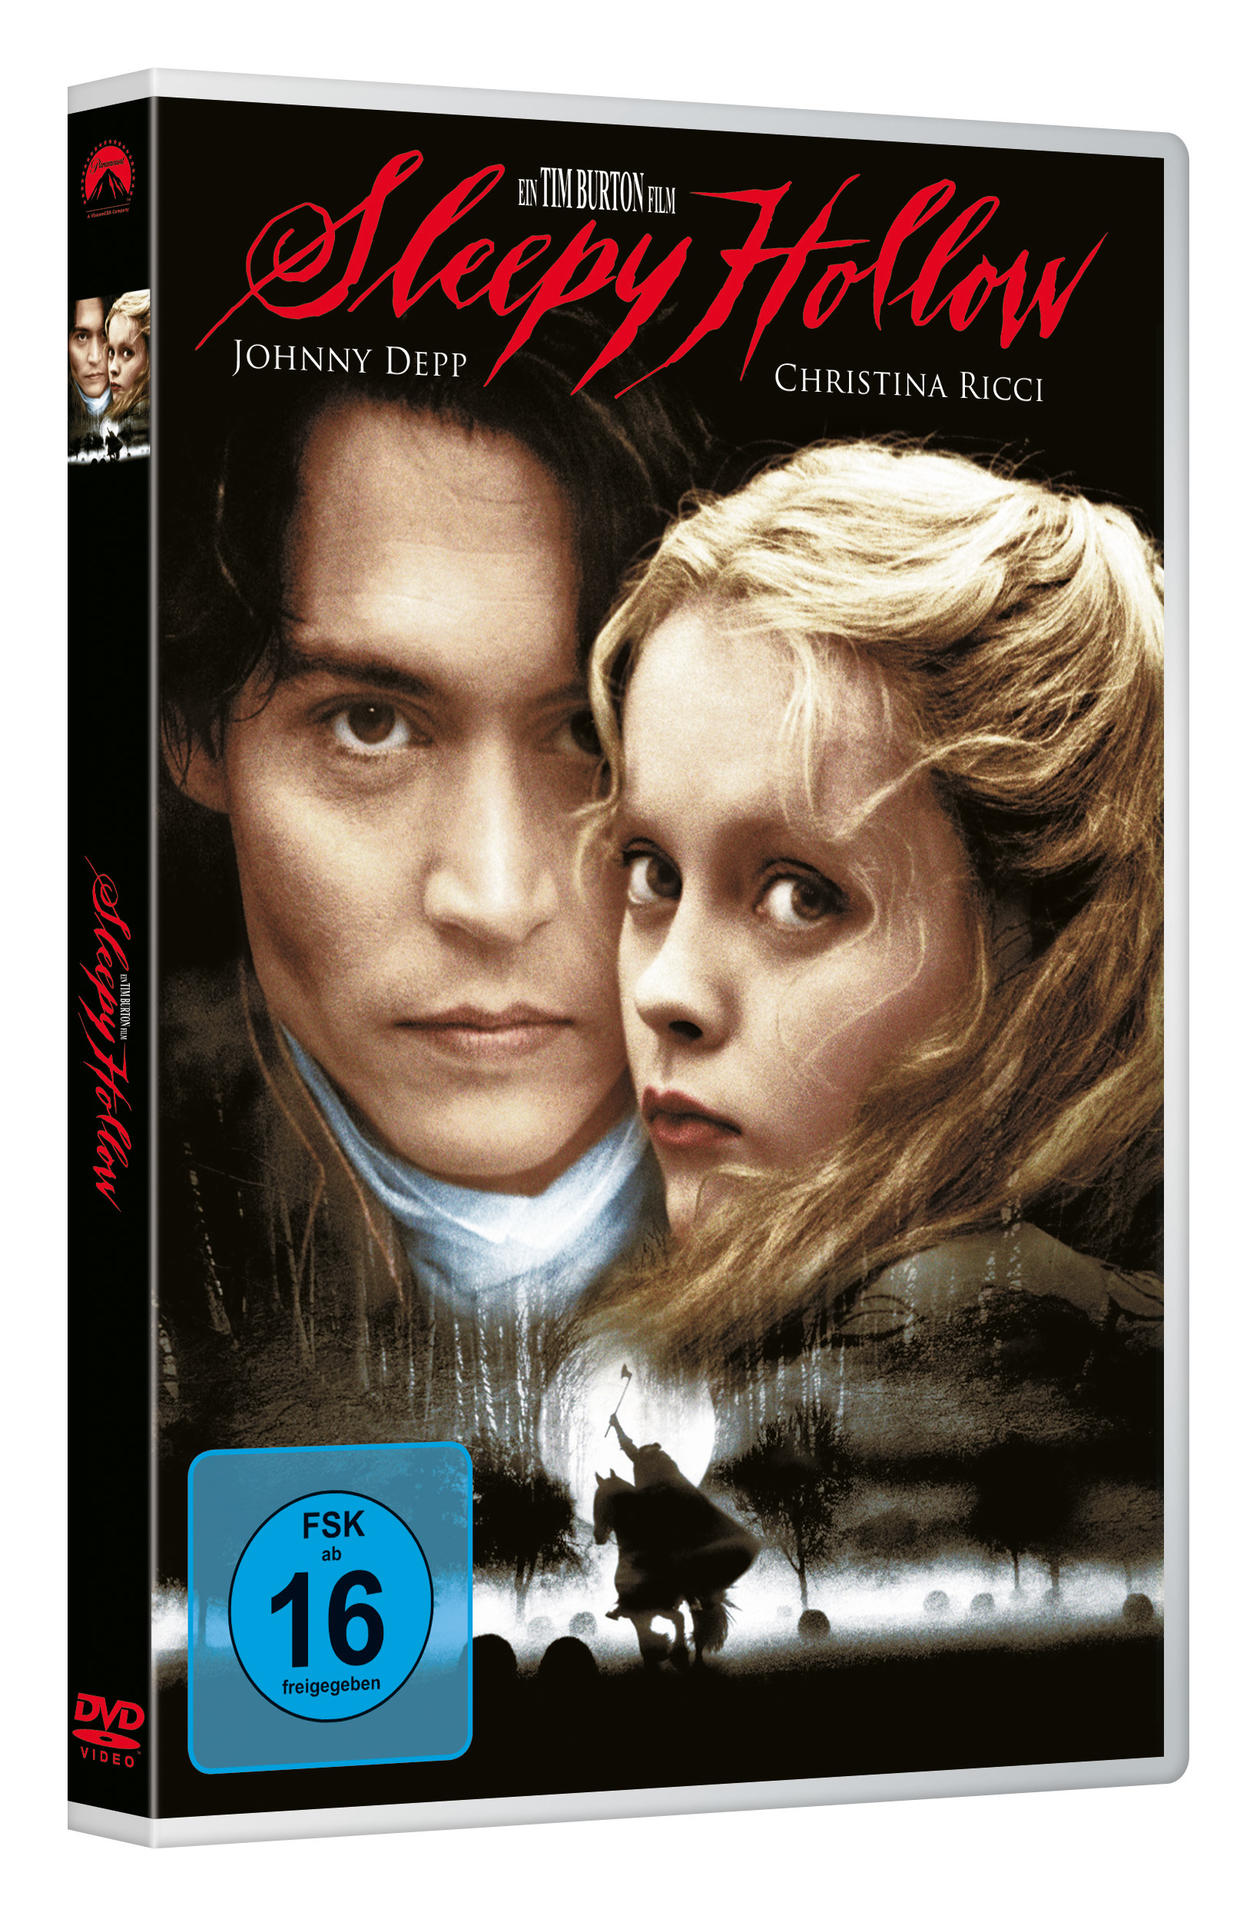 Blu-ray + Ultra 4K Hollow HD Sleepy Blu-ray